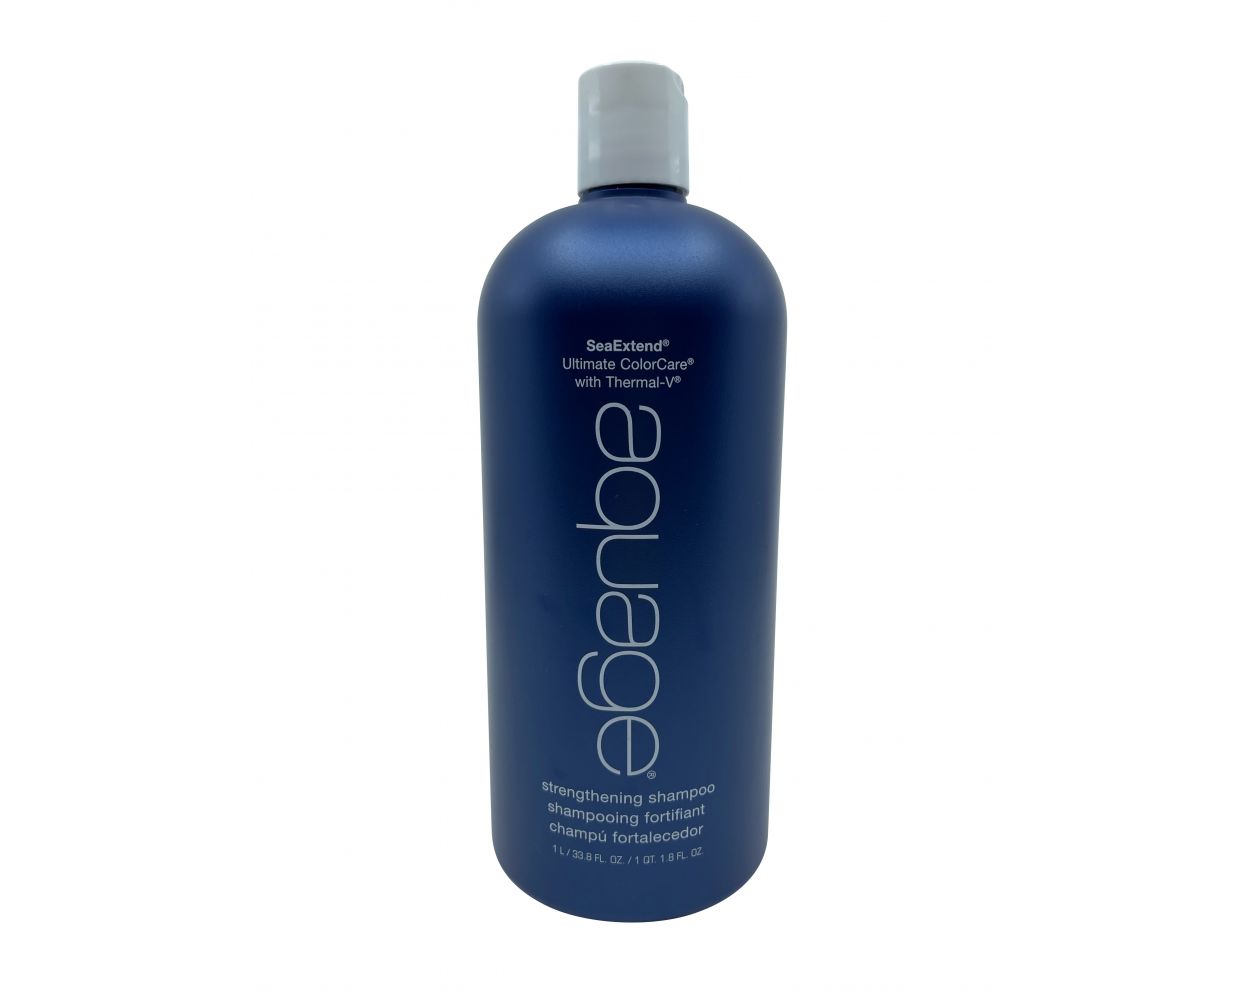 Aquage Strengthening Shampoo Shampoo - Beautyvice.com